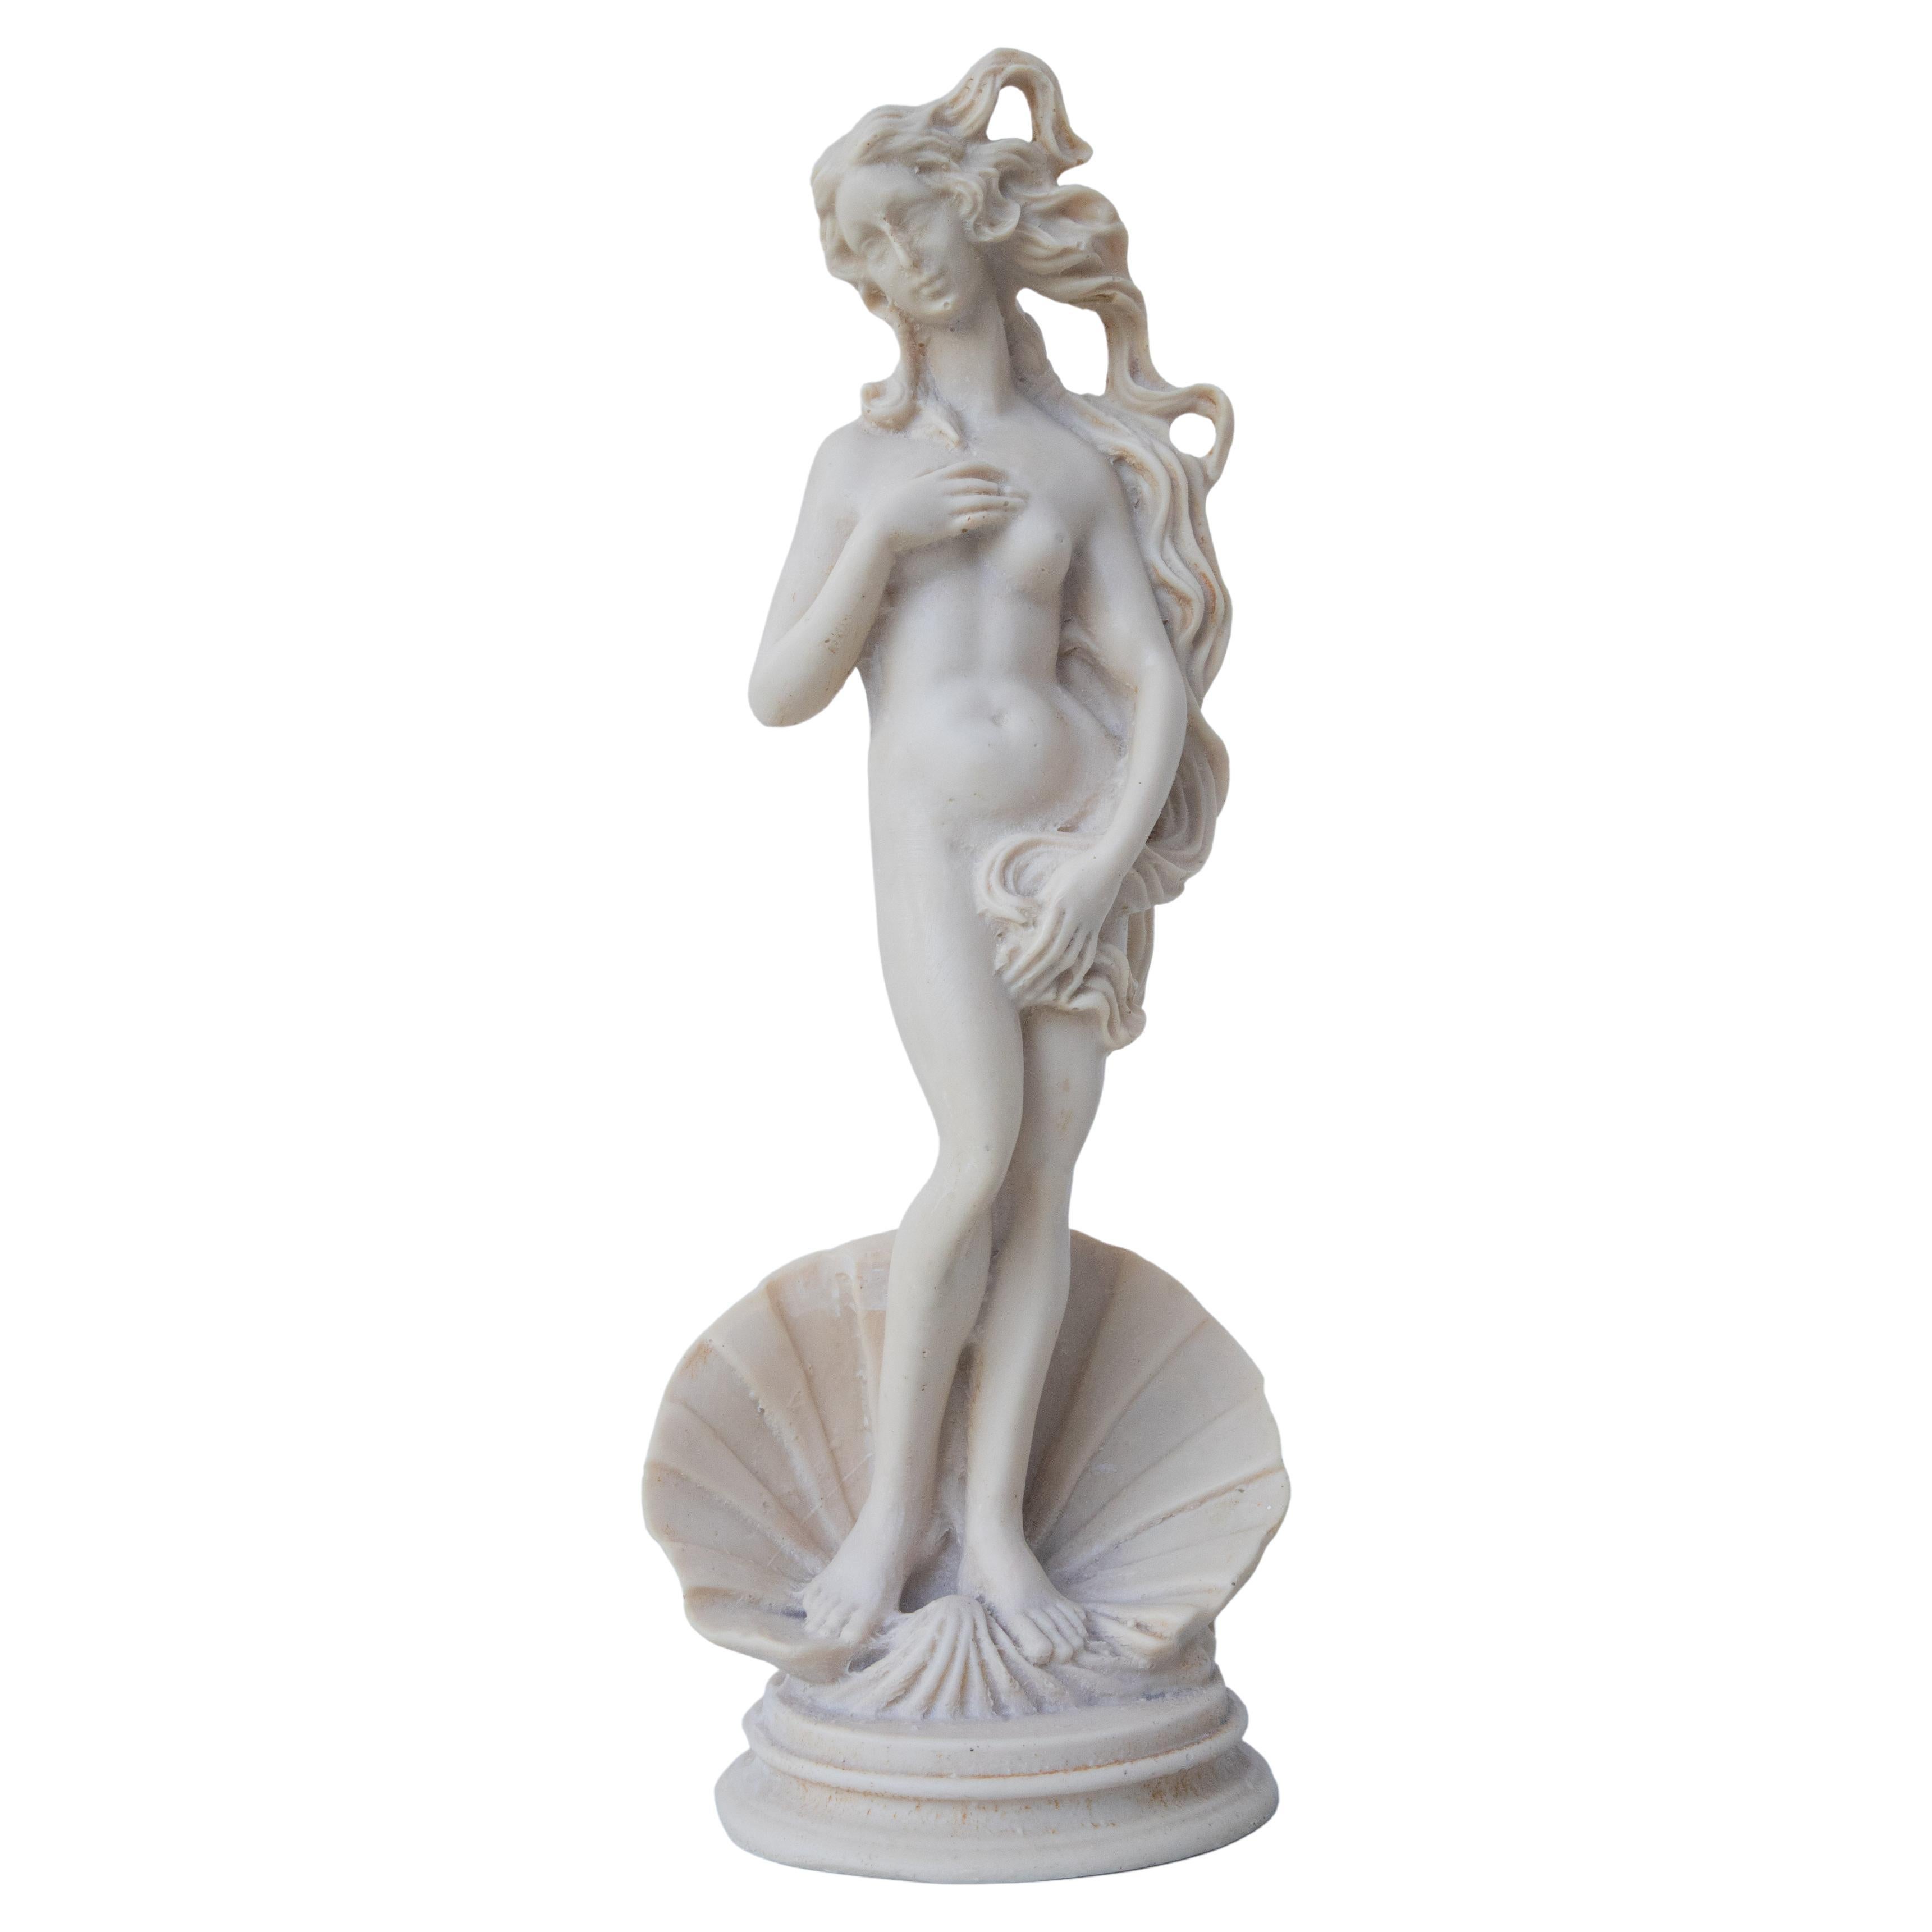 Vintage Sculpture Birth of Venus Botticelli, 1970